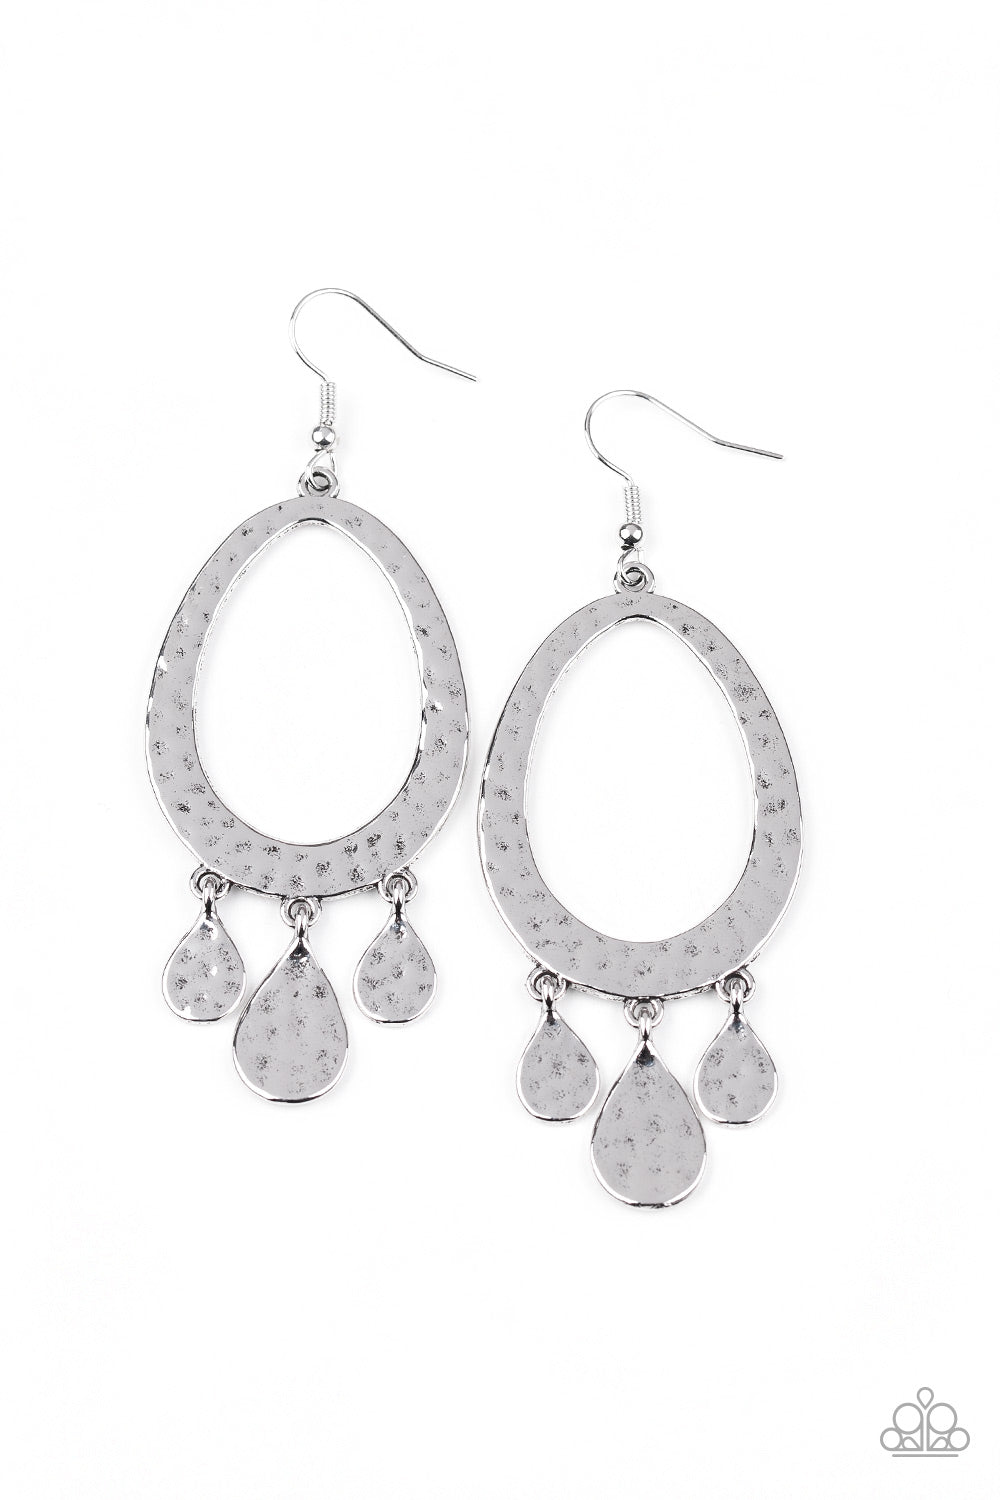 Taboo Trinket - Silver Earrings - Princess Glam Shop